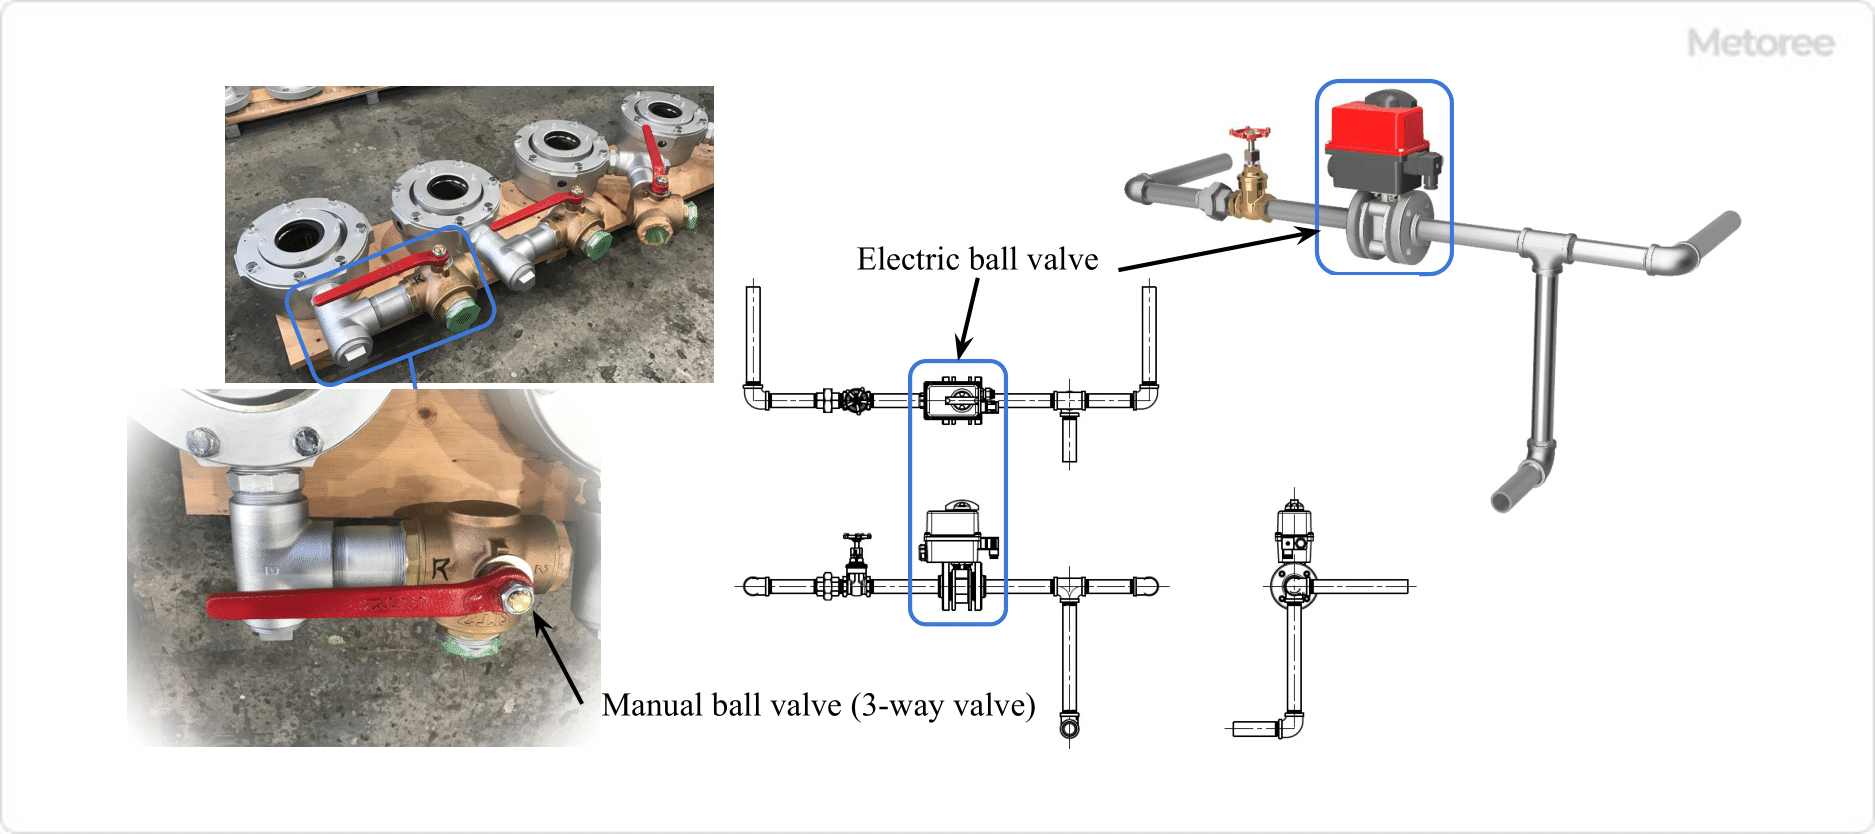 Figure 1. Example of ball valve use